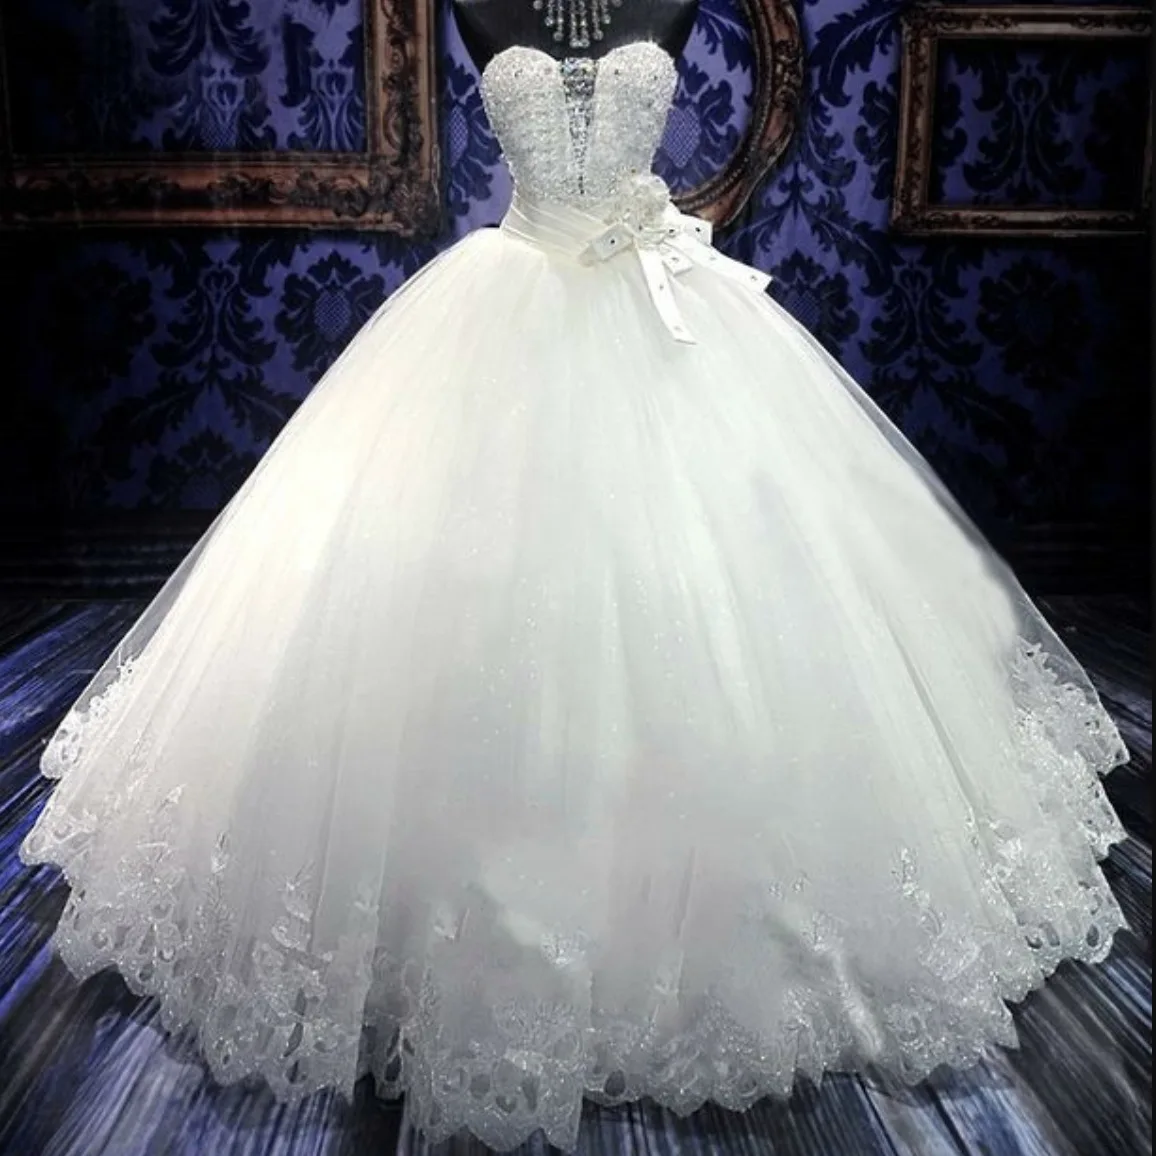 

GUXQD White Elegant Ball Gown Wedding Dress Women Lace Up Sweetheart Beading Bridal Gowns Vestido De Novia Robe De Mariee